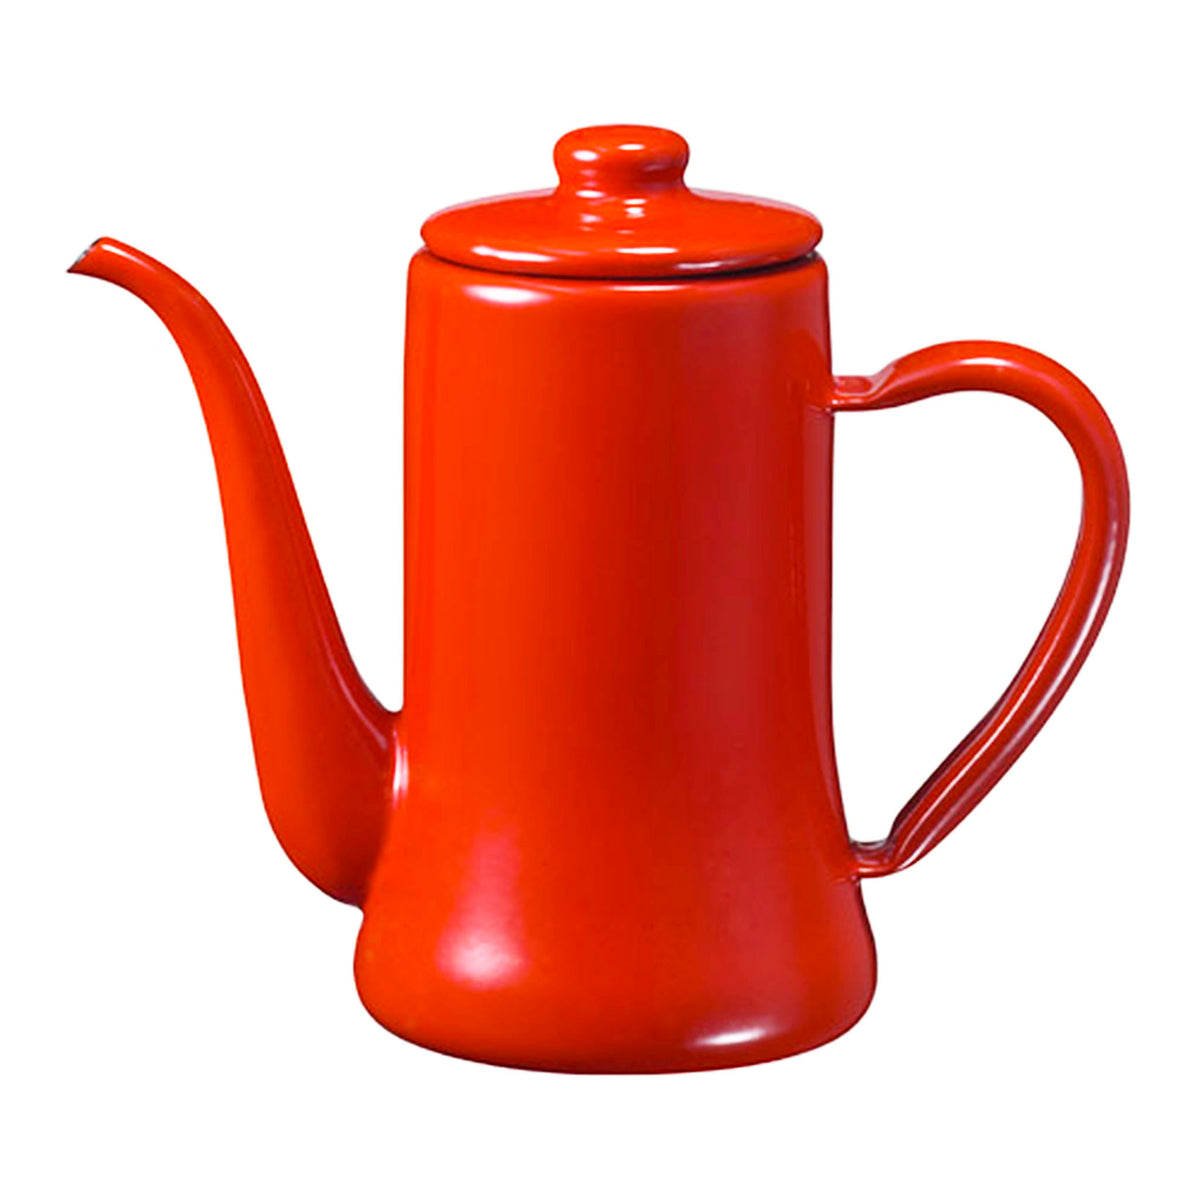 Vintage Red Enamel Teapot, Vintage Enamelware, Enamelware Pot, Enamelware,  Enamelware Teapot, Enamel Tea Kettle, Tea Kettle, Kitchen Decor. 